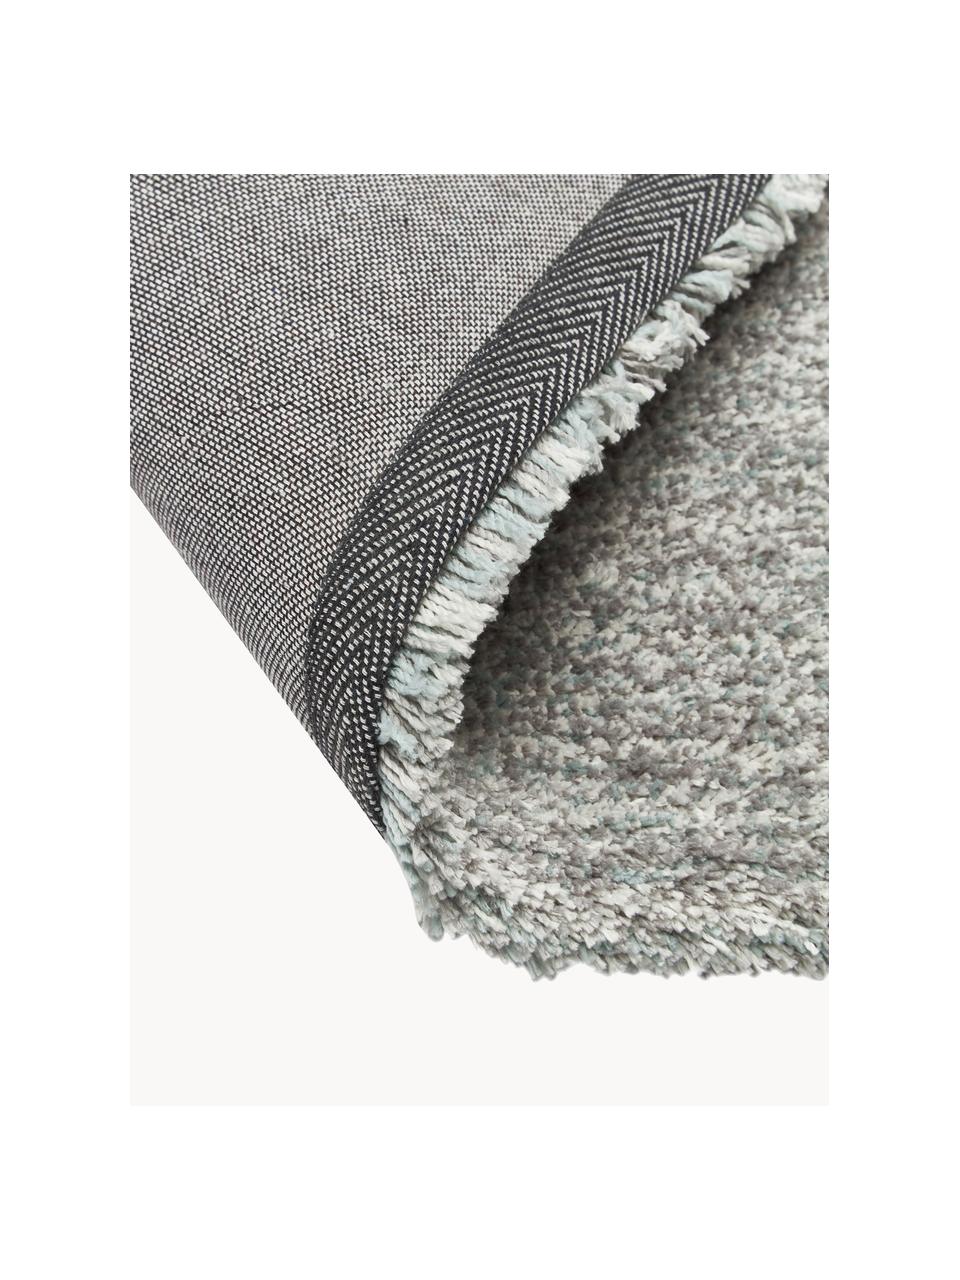 Flauschiger Melange Hochflor-Teppich Marsha, Flor: 100 % Polyester, Hellgrau, B 80 x L 150 cm (Grösse XS)